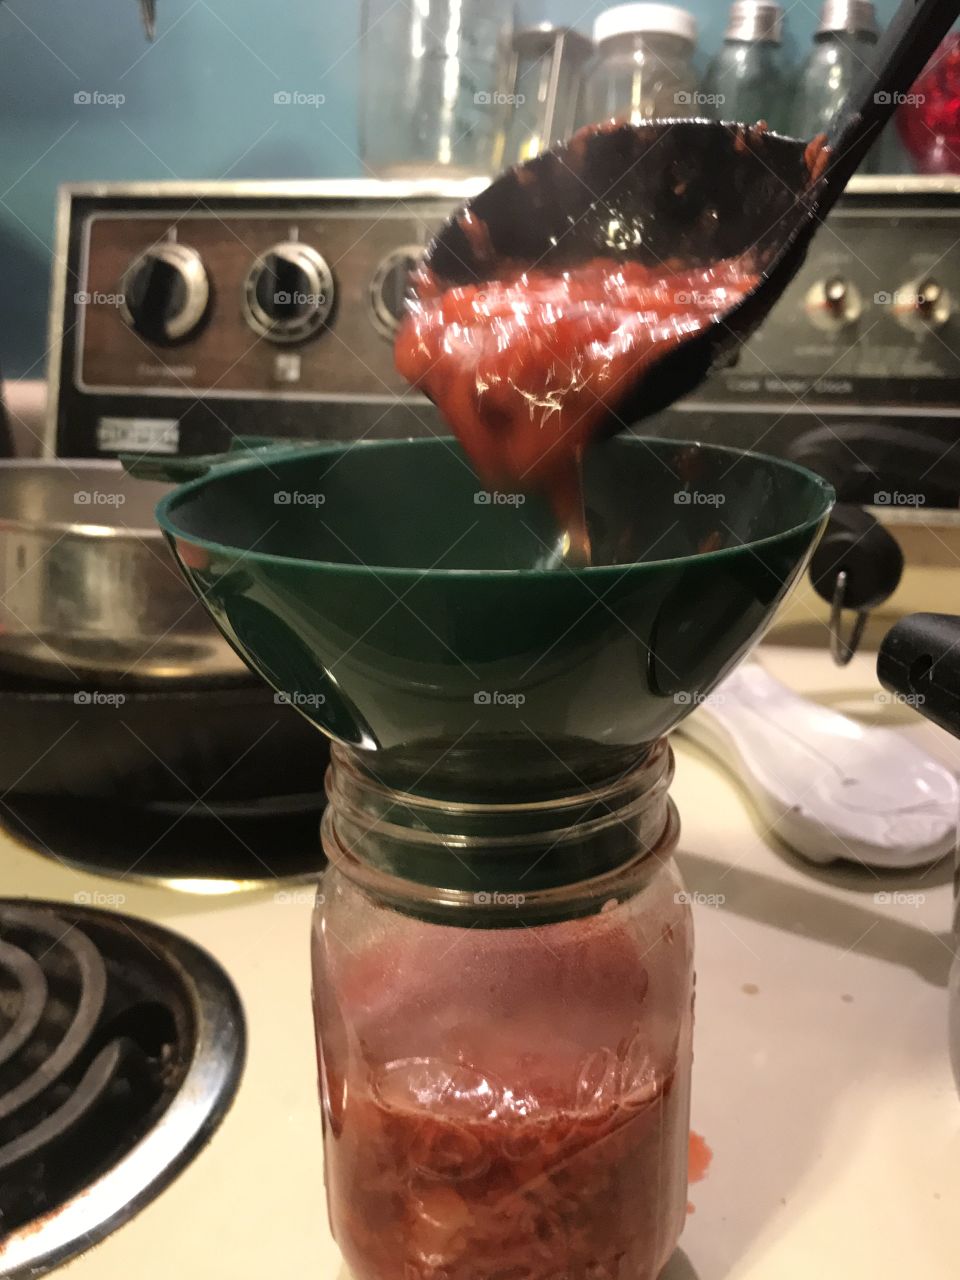 Filling the jar